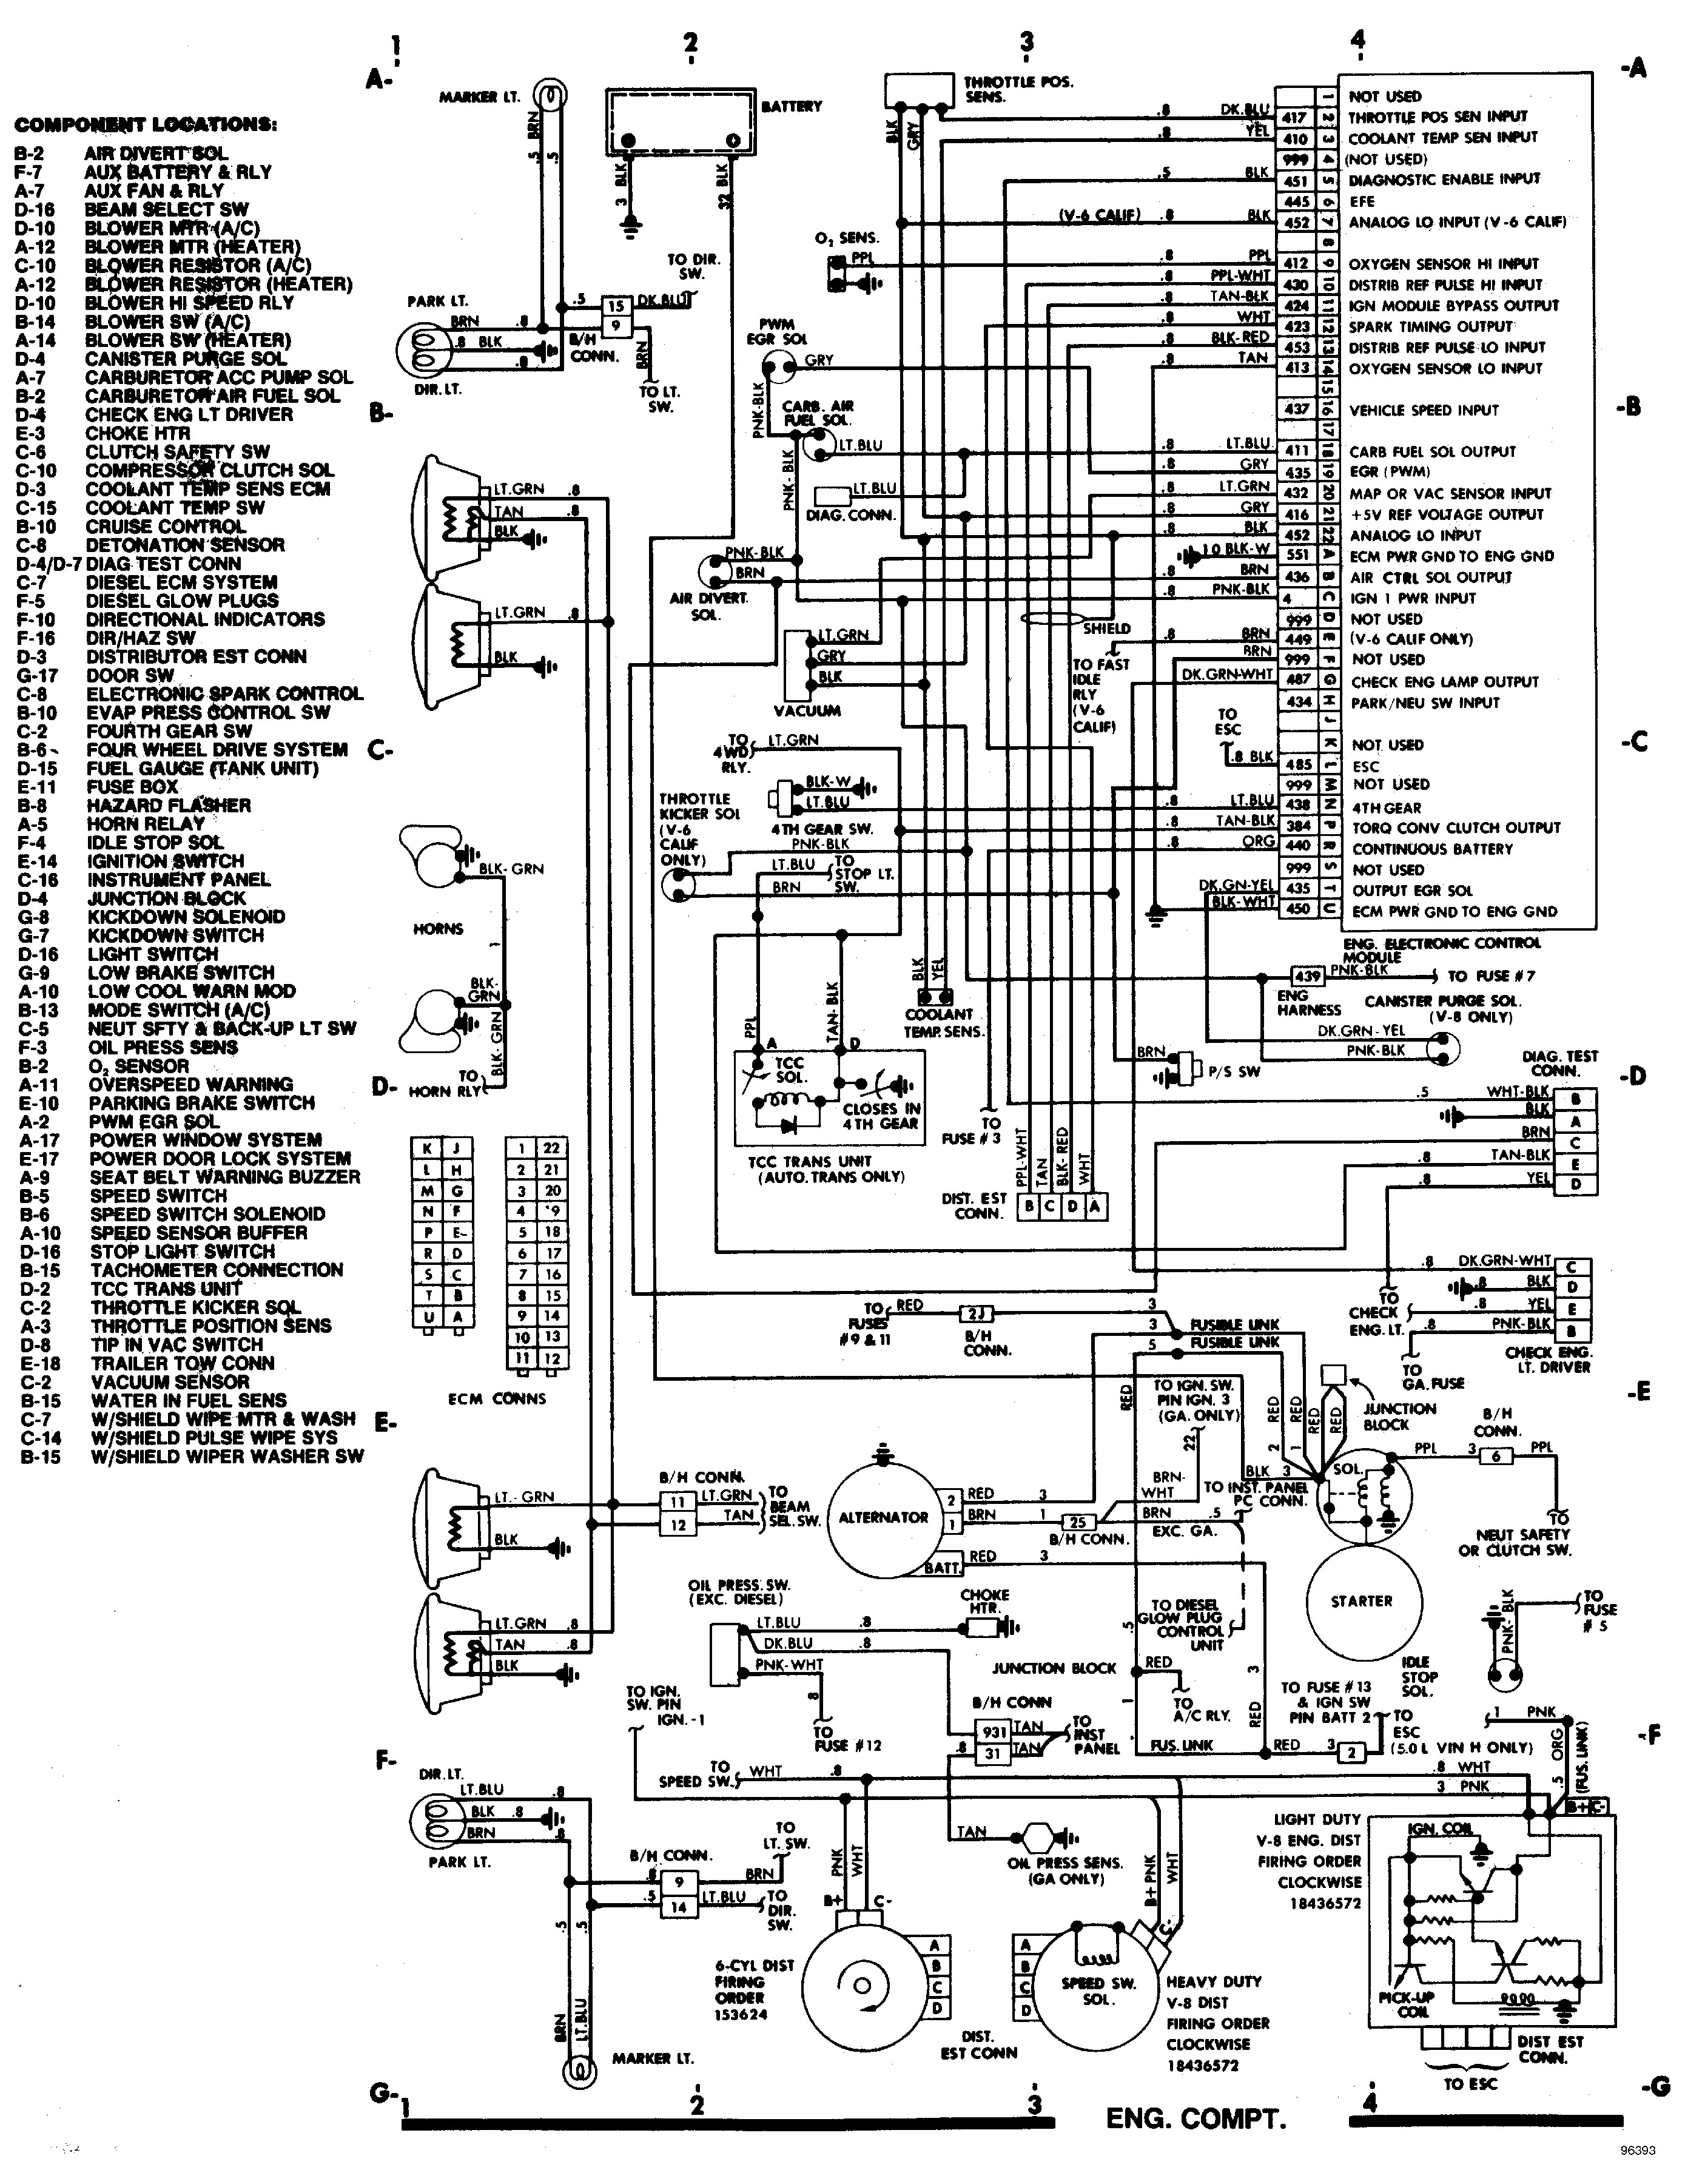 Truck Engine Diagram 94 Chevy Blower Motor Diagram Free Download Wiring Diagram Schematic Of Truck Engine Diagram